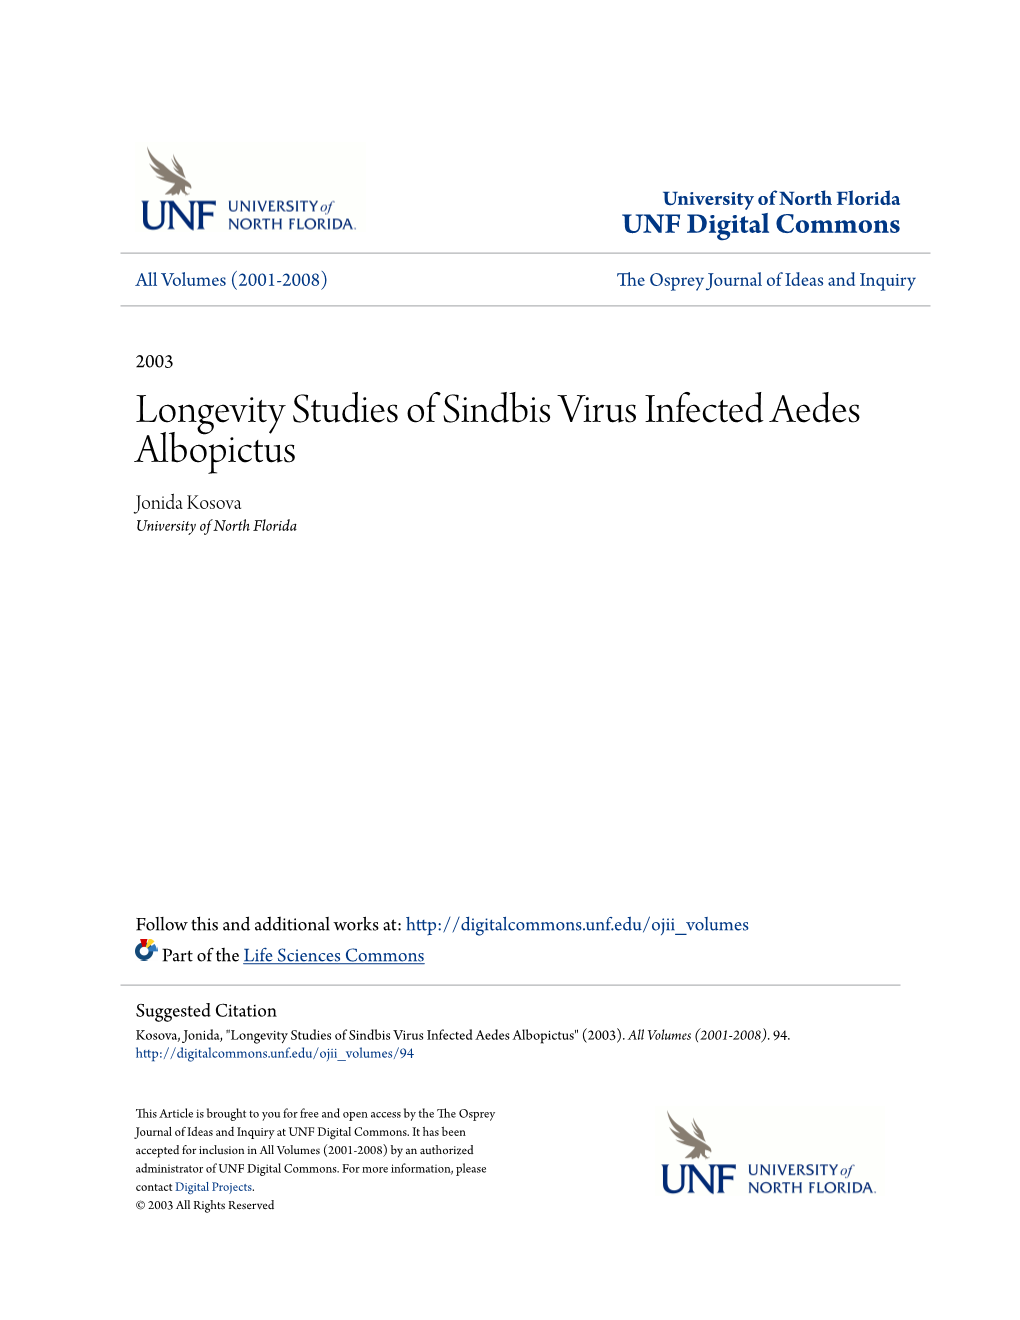 Longevity Studies of Sindbis Virus Infected Aedes Albopictus Jonida Kosova University of North Florida